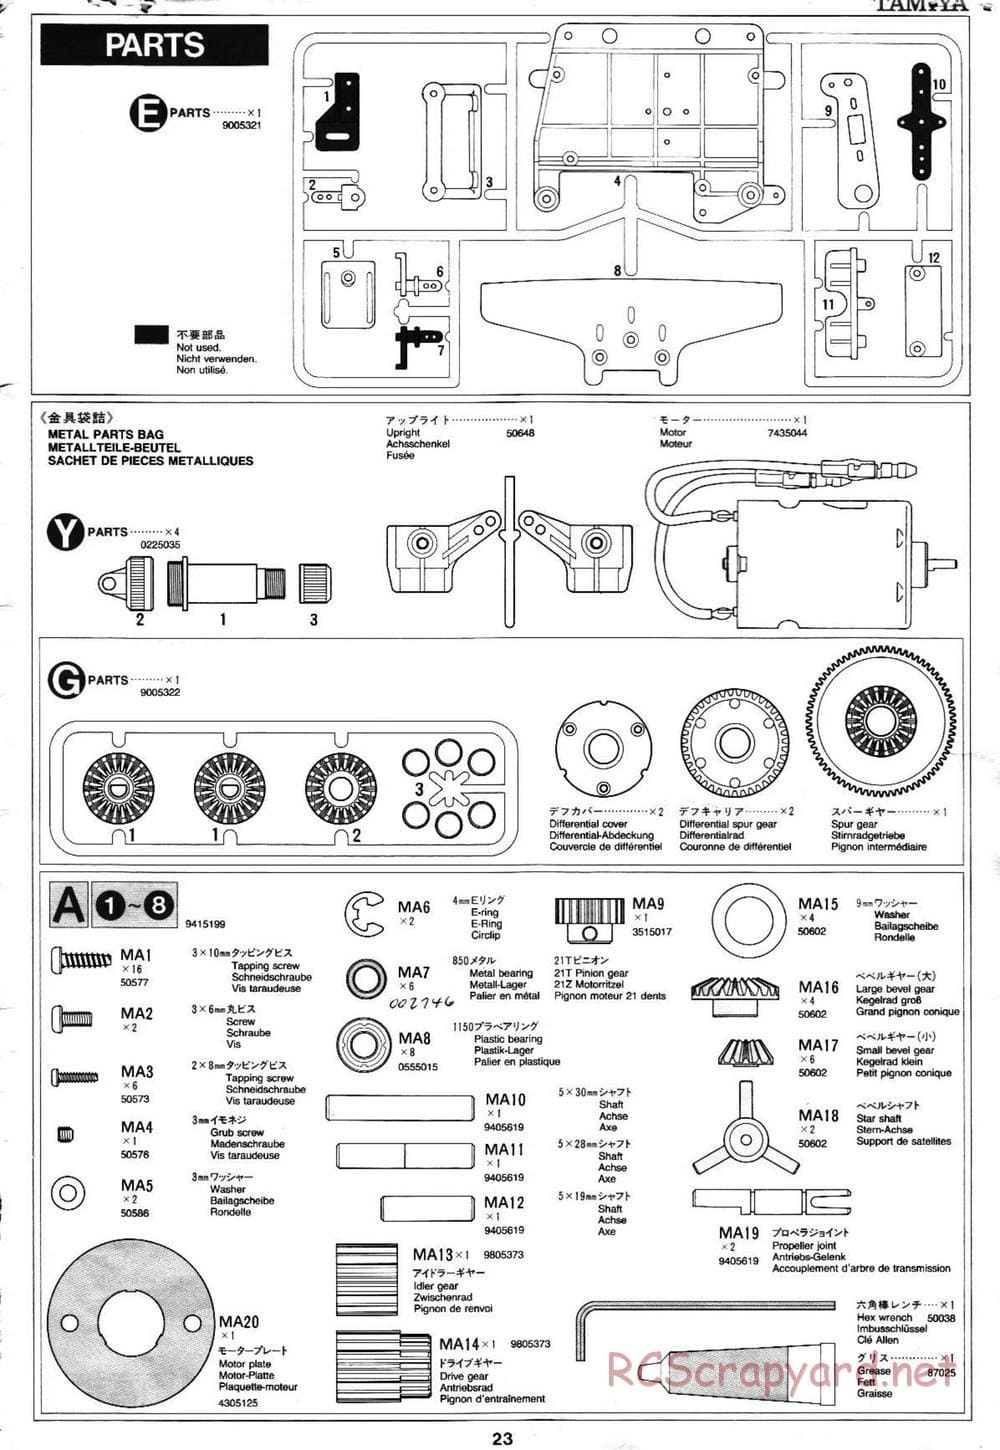 Tamiya - Blazing Star Chassis - Manual - Page 23